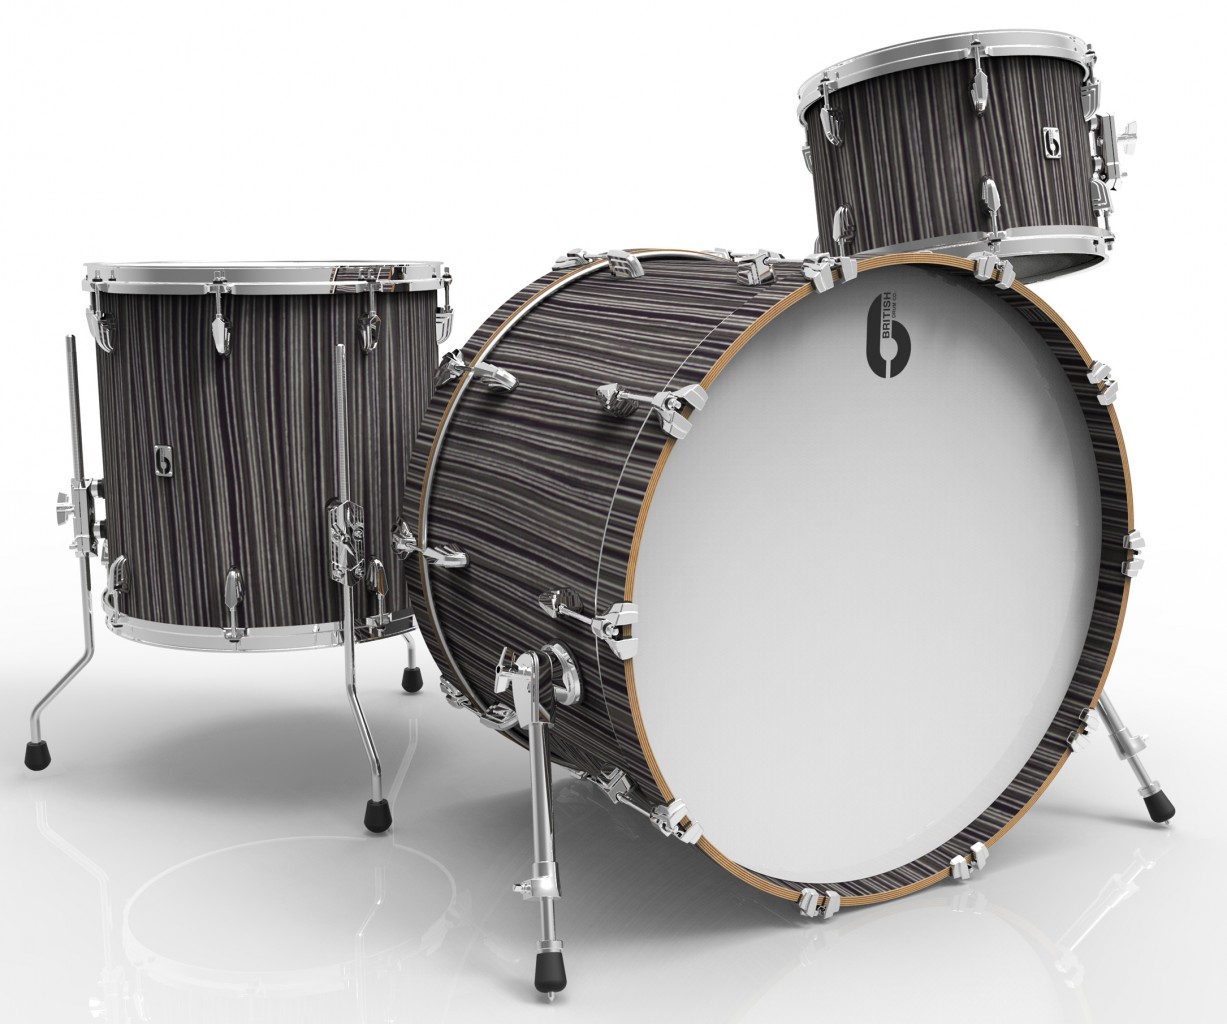 Legend Club 22 3-piece drum set, cold-pressed birch 6 mm shells, Carnaby Slate finish